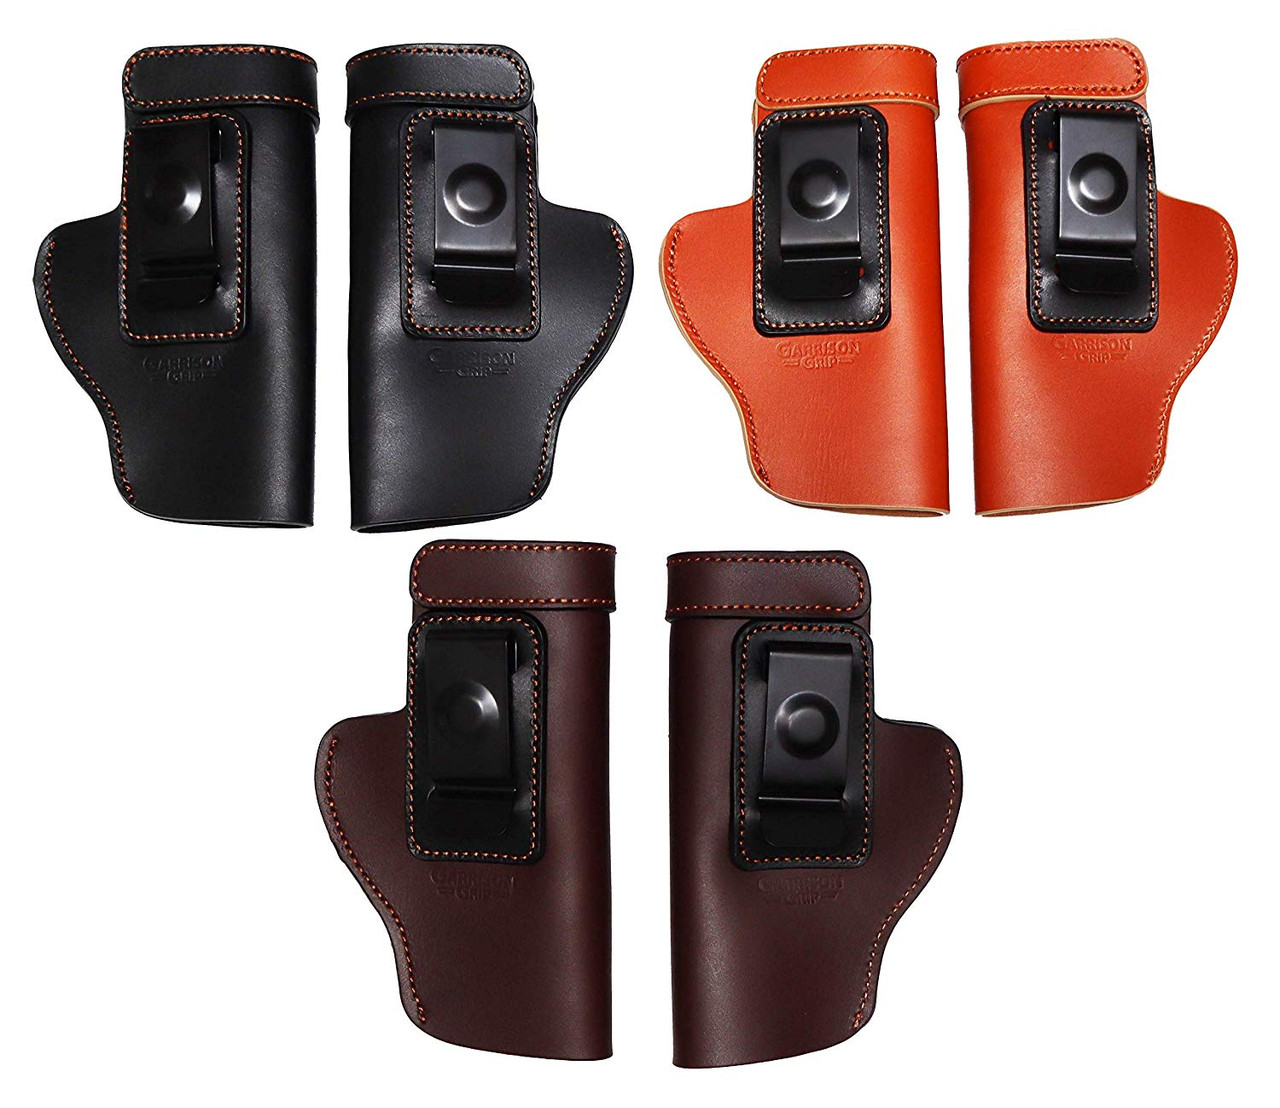 Garrison Grip Premium Brazilian Leather IWB Inside Waistband Holster Fits The Taurus PT111 Gen2 G2 & G2c